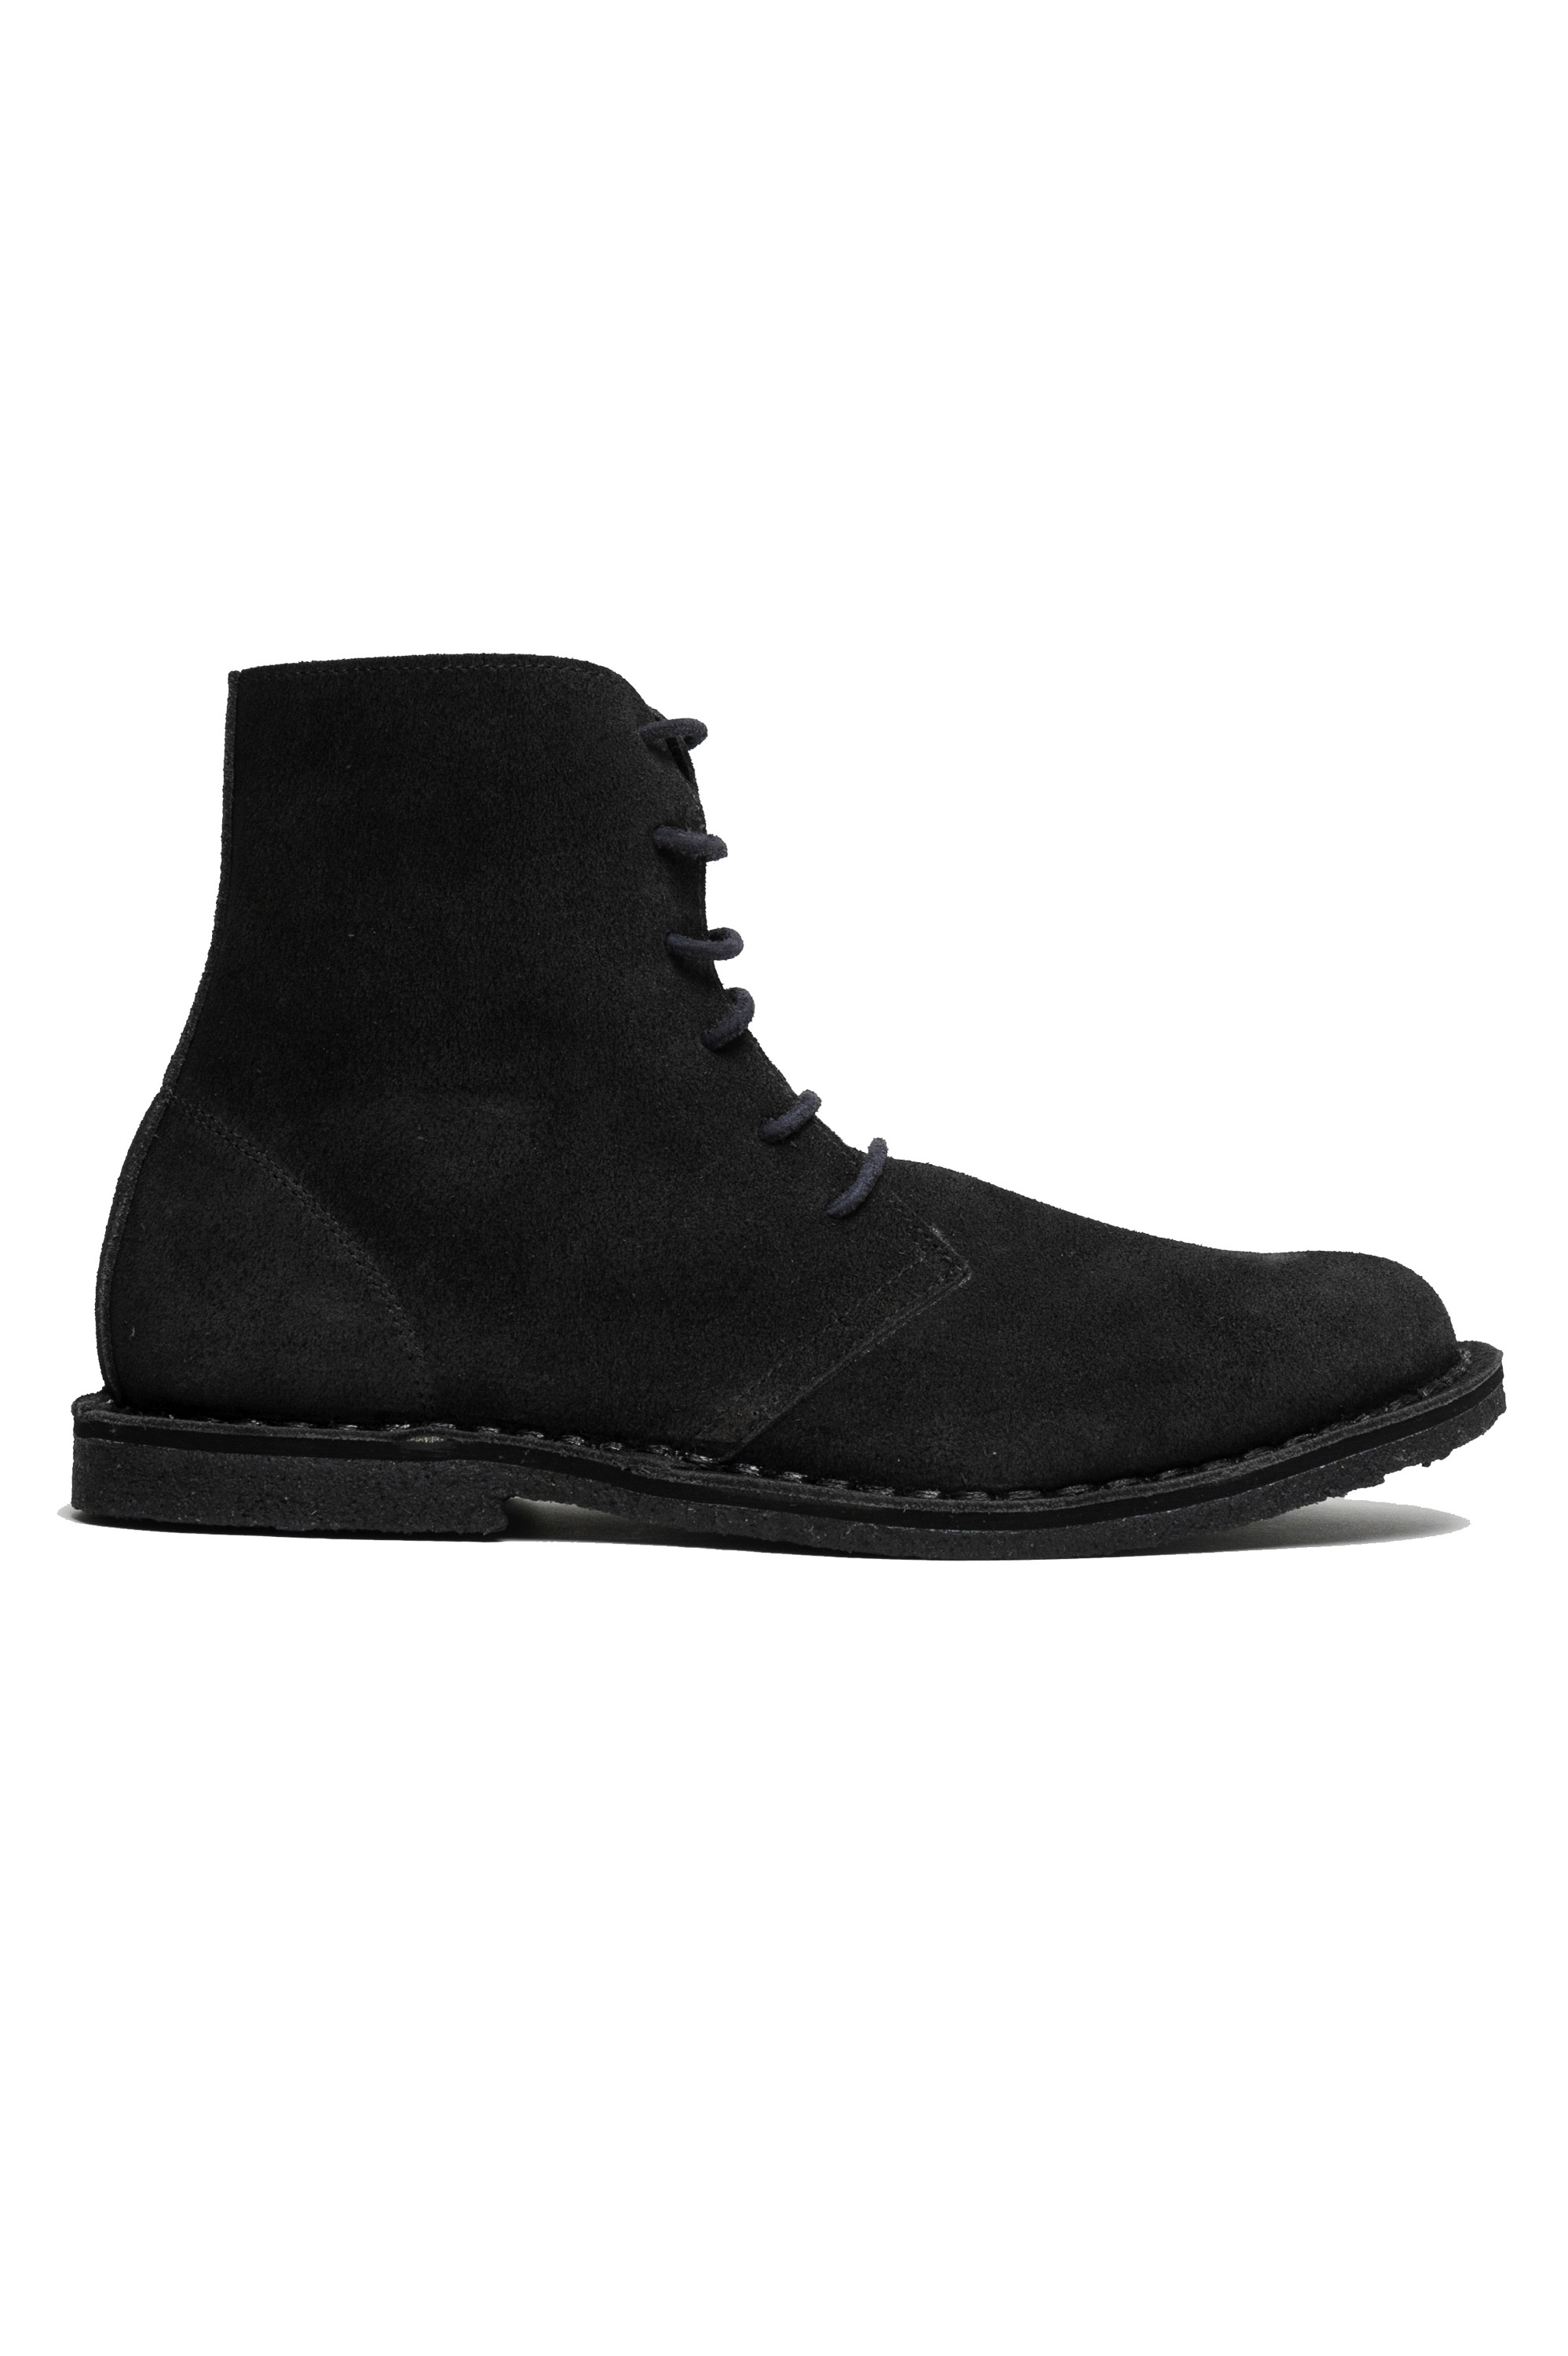 SBU 04669_I_23AW Desert boots classiche in pelle scamosciata nera 01